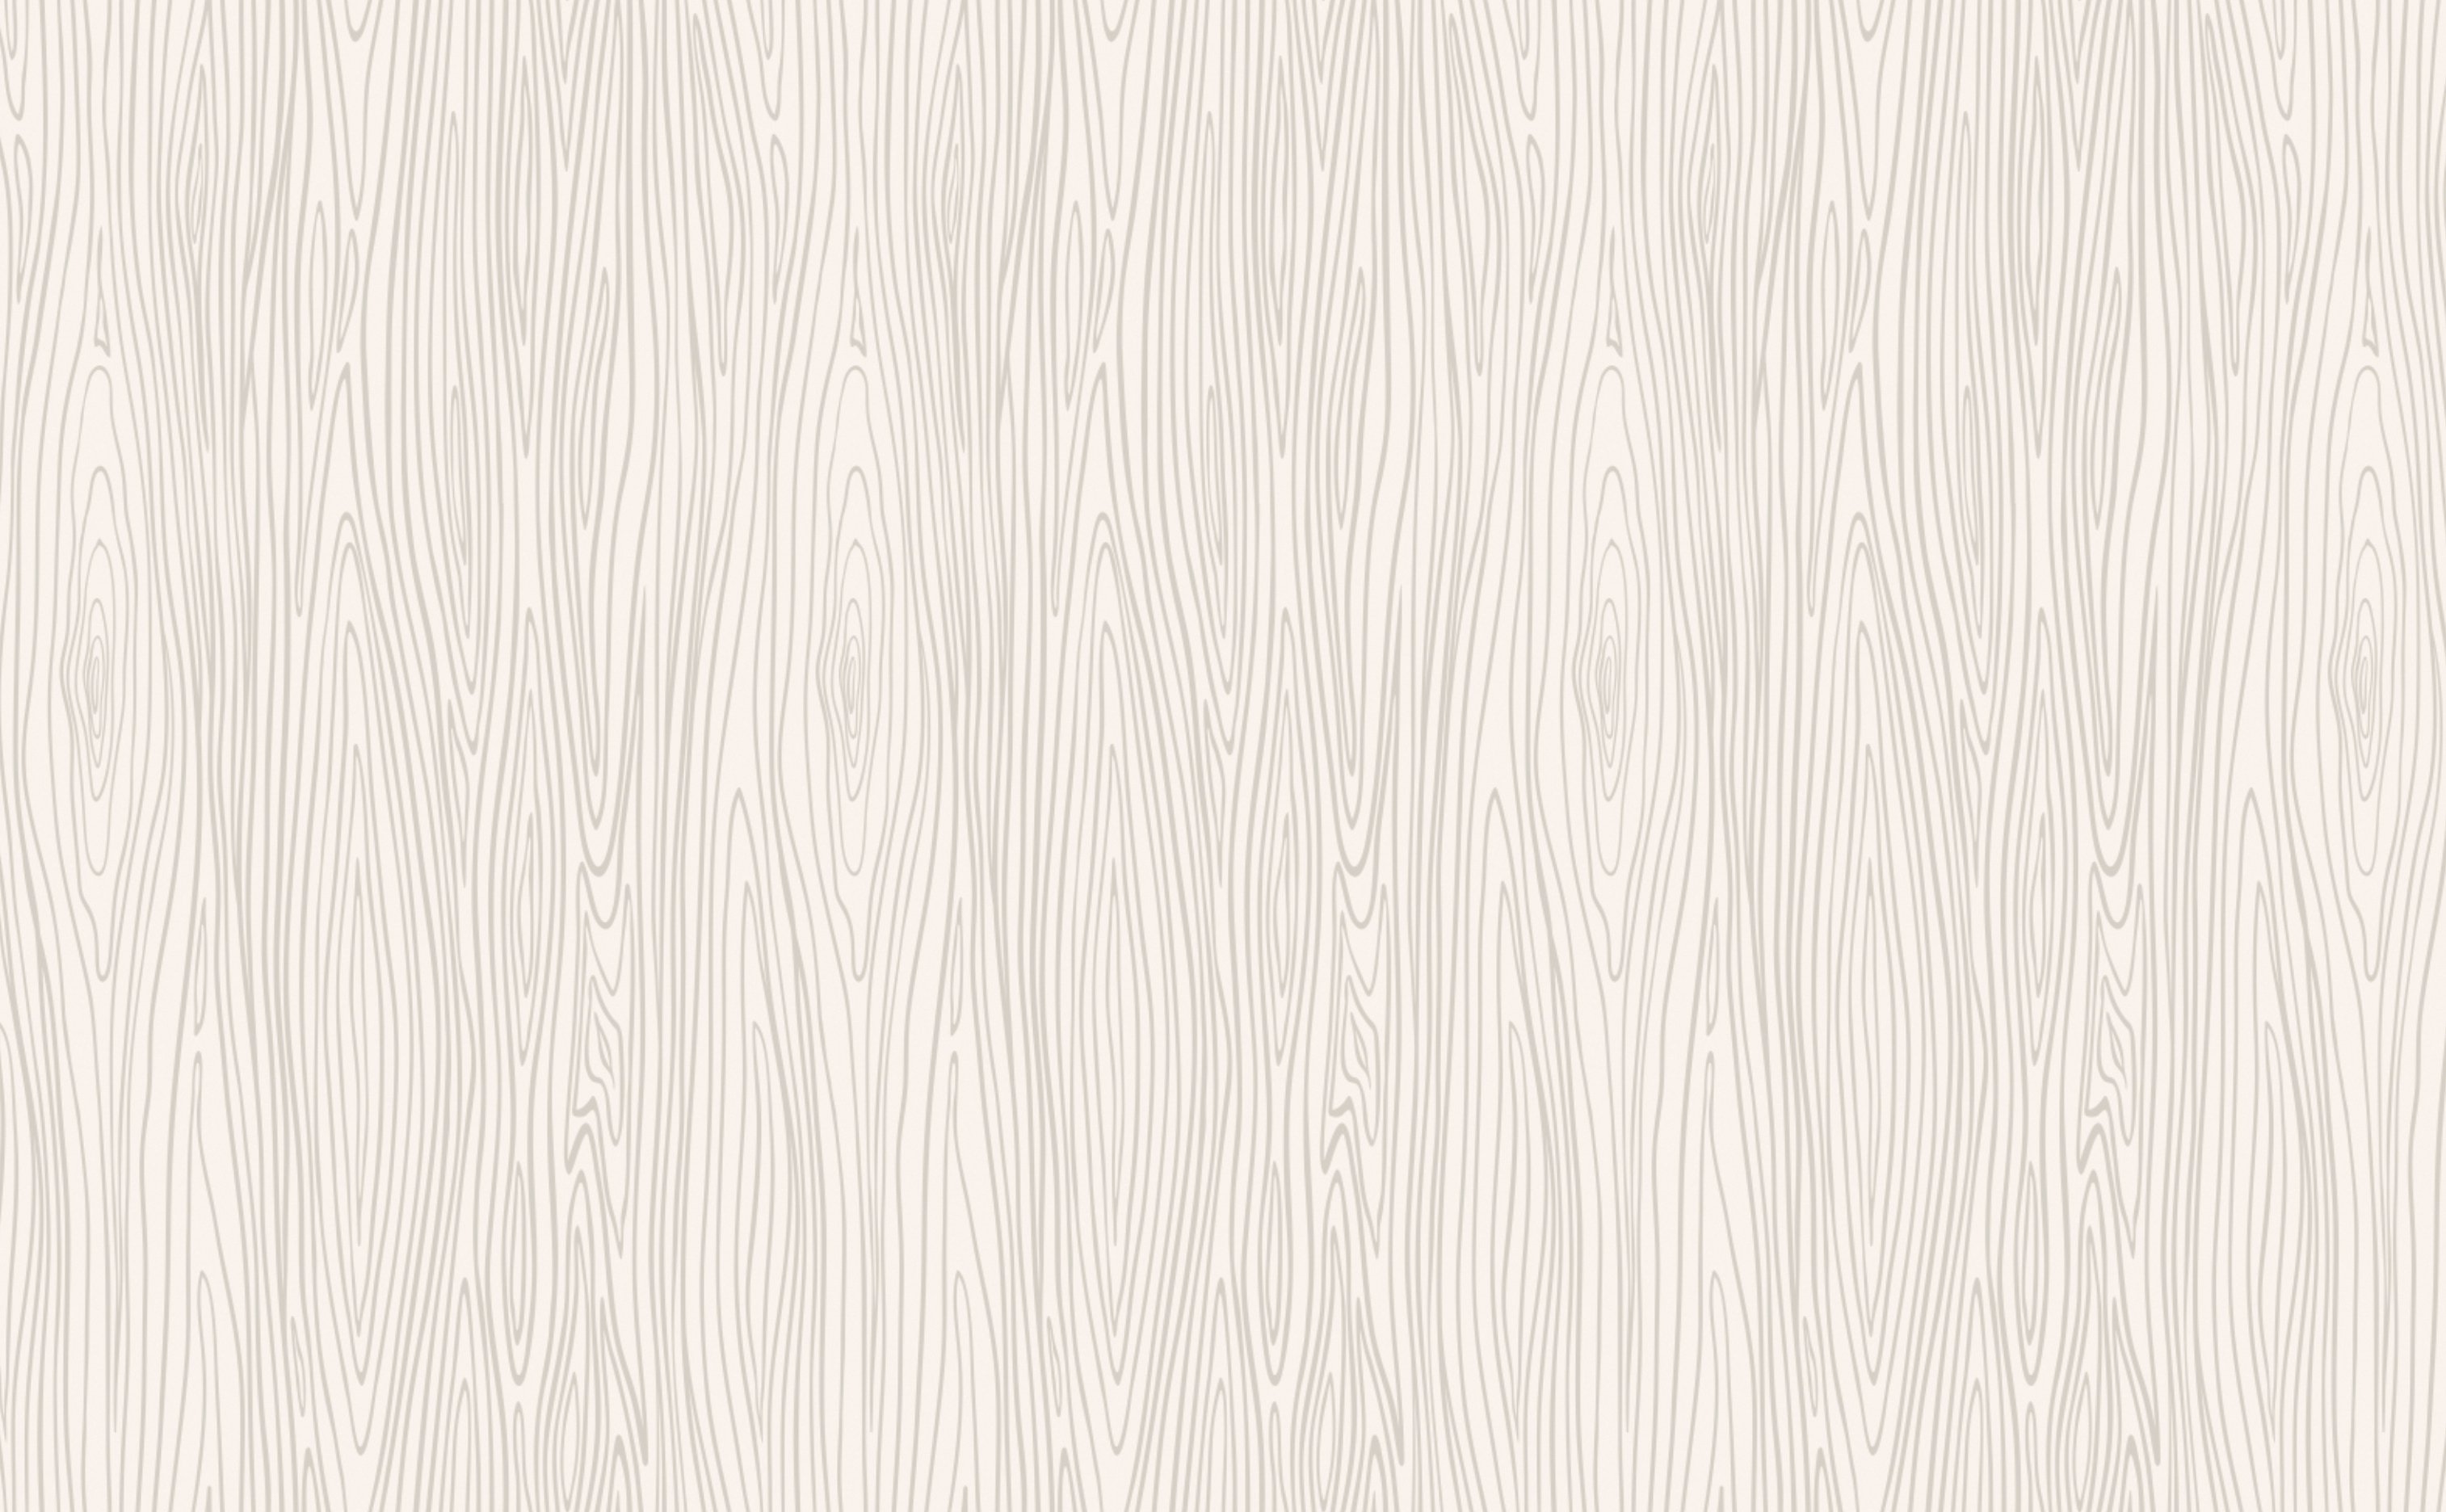 White Wood Grain Wallpaper